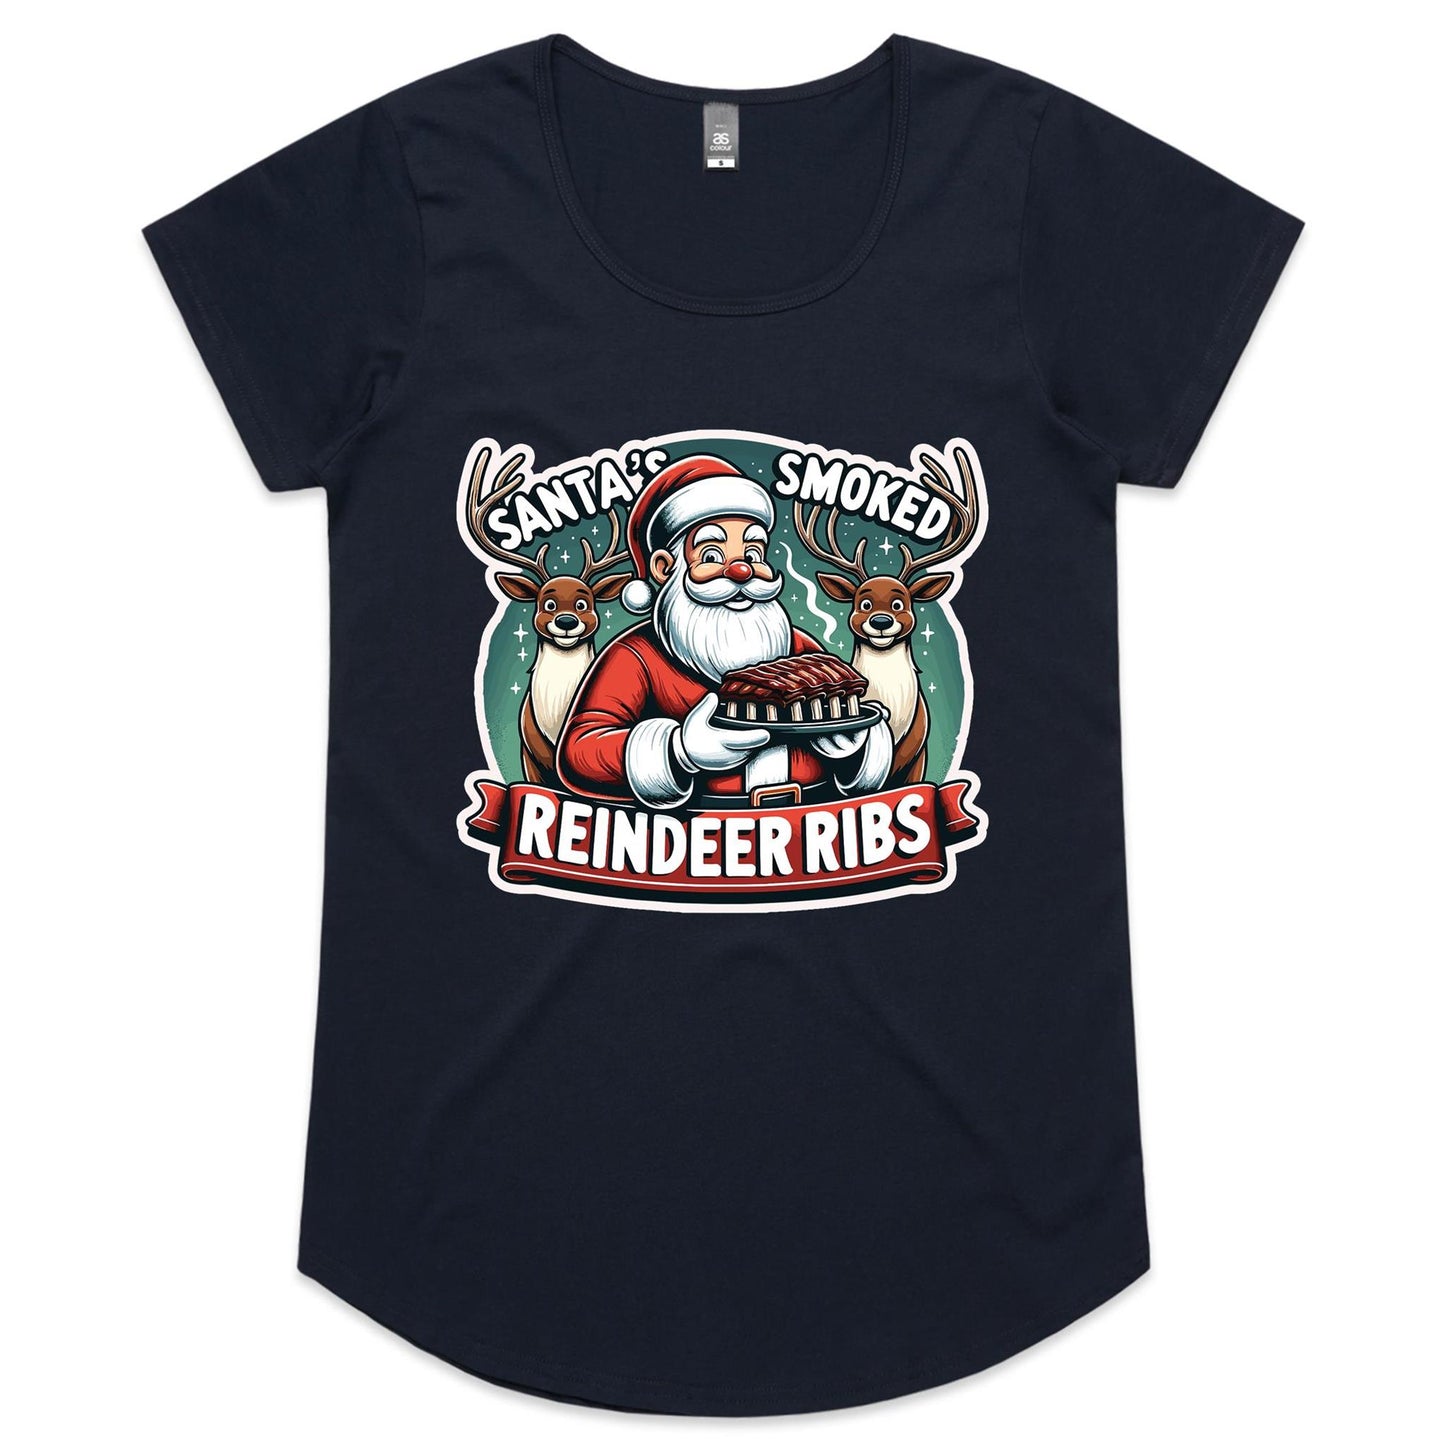 Santas Smoke Reindeer Ribs Xmas Day - Womens Scoop Neck T-Shirt